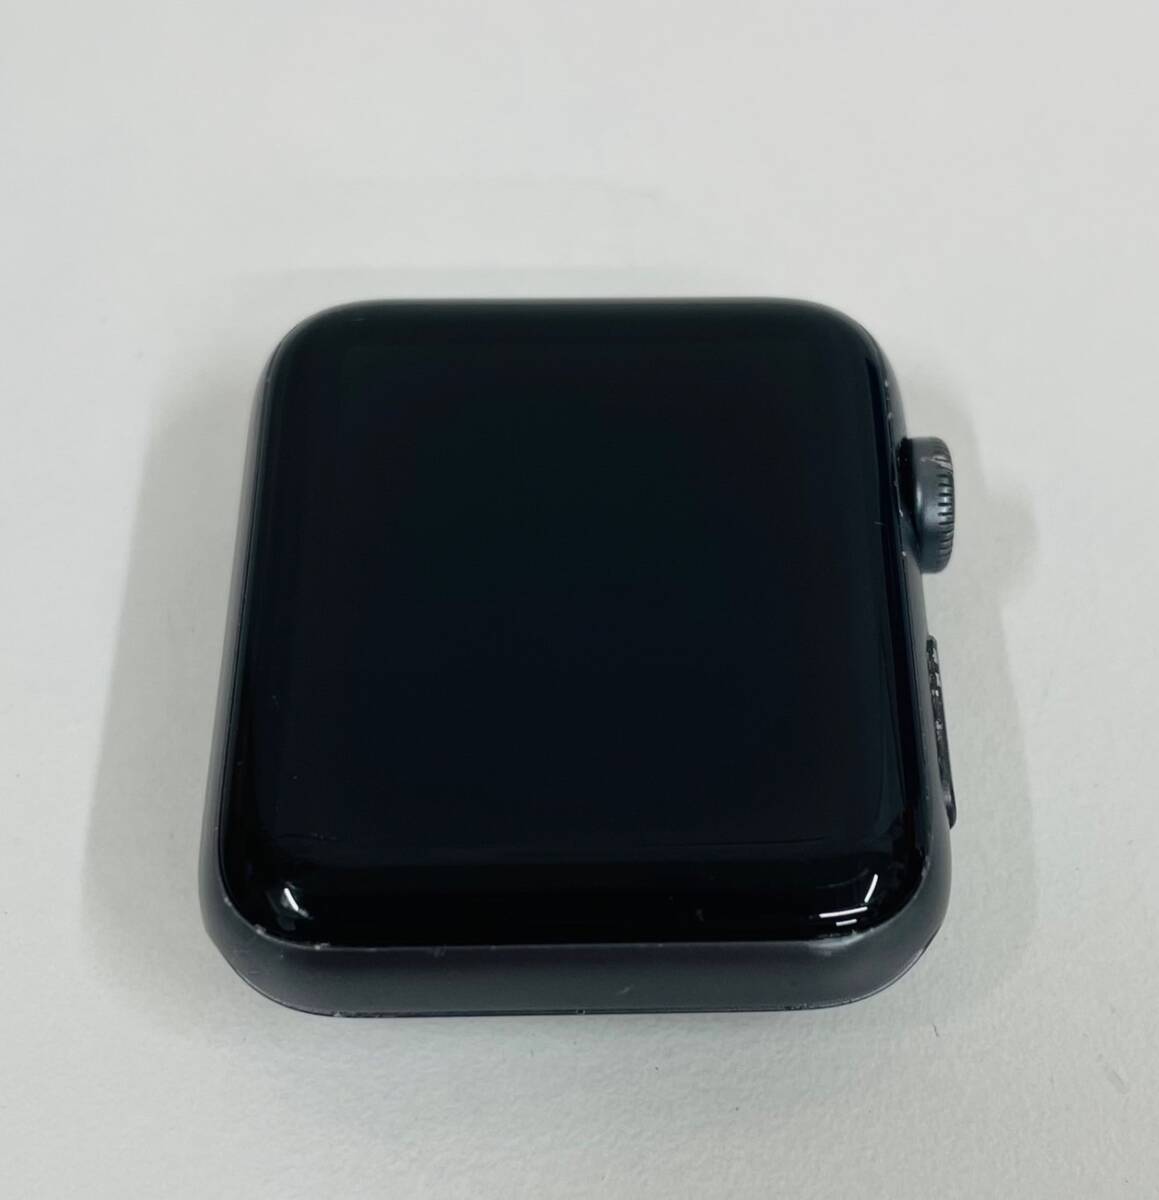 [TK12143KM]1 jpy start Apple AppleWatch series 3 42mm body only electrification not yet verification Junk parts .. smart watch 